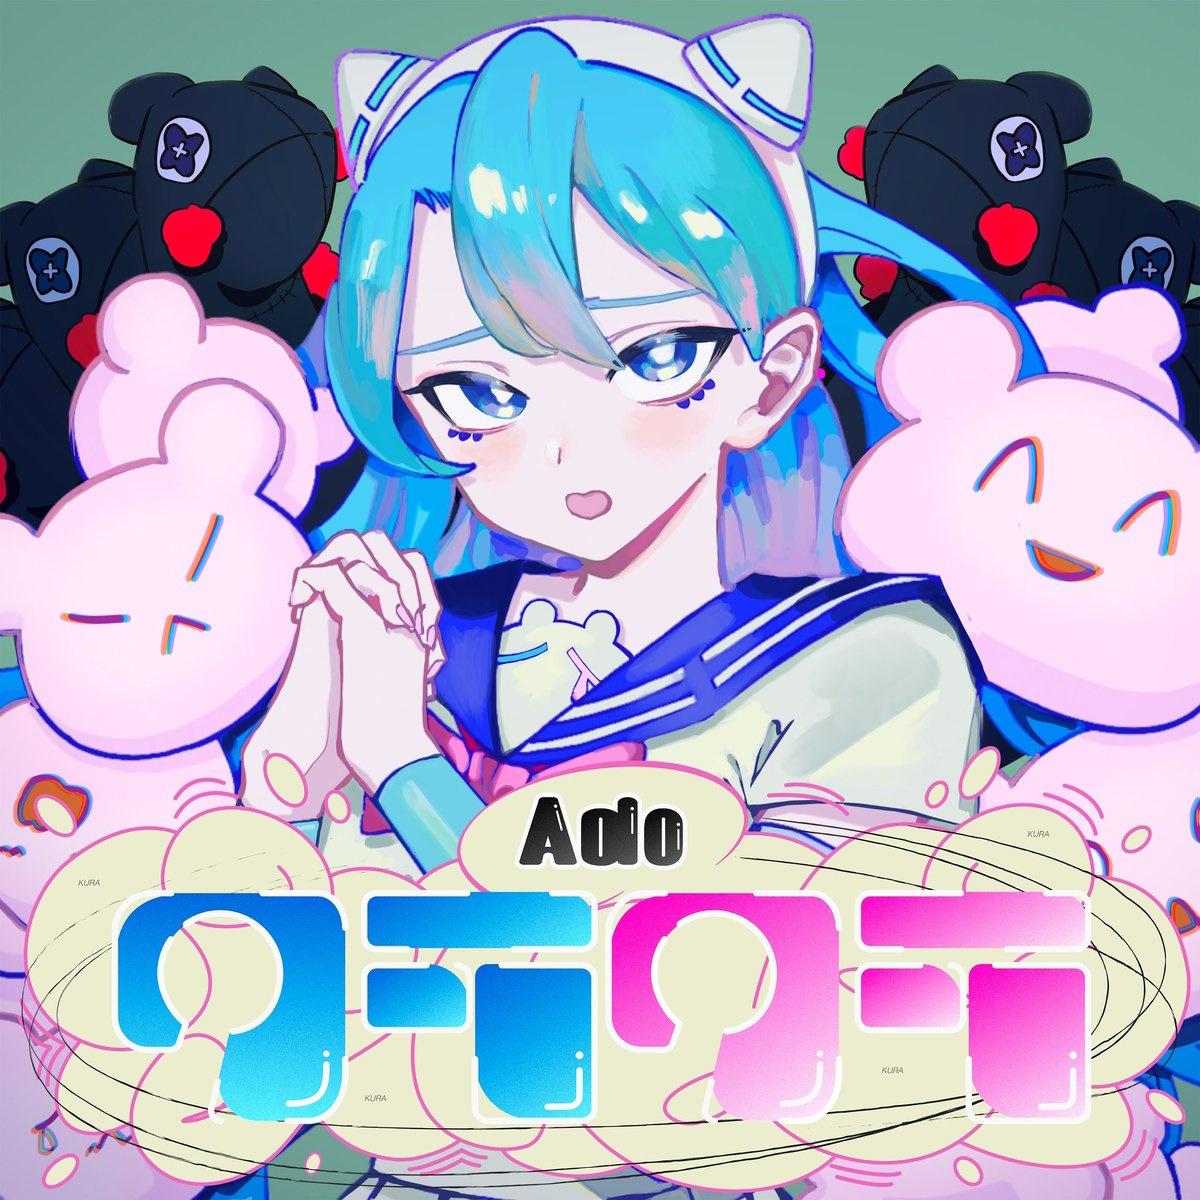 Cover art for『Ado - クラクラ』from the release『Kurakura